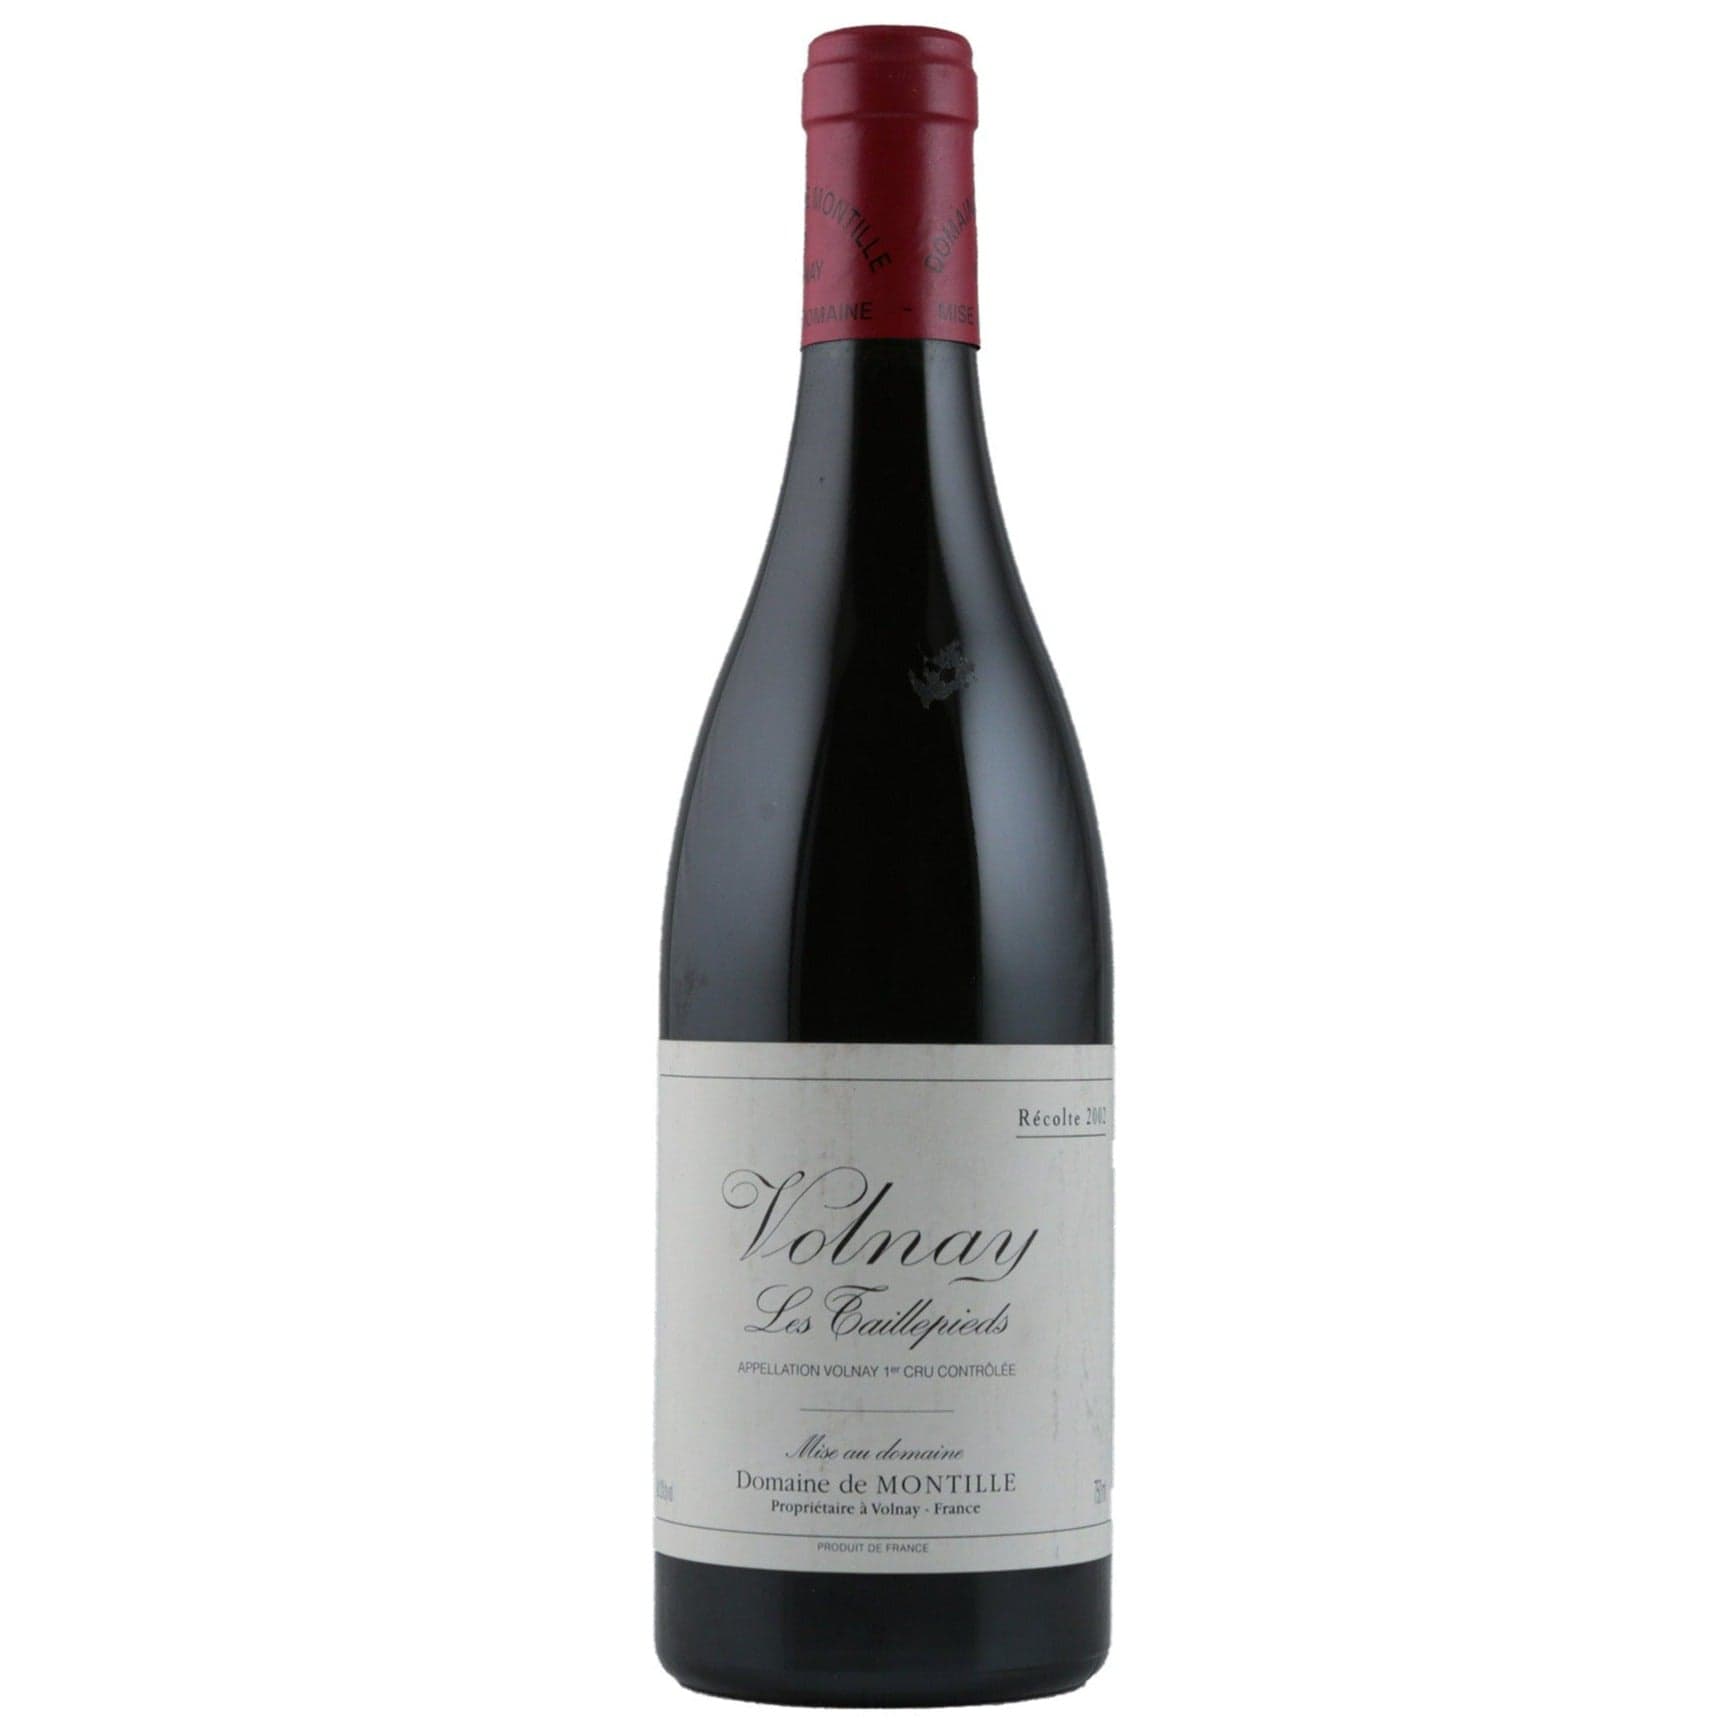 Single bottle of Red wine Dom. de Montille, Les Taillepieds Premier Cru, Volnay 2002 100% Pinot Noir